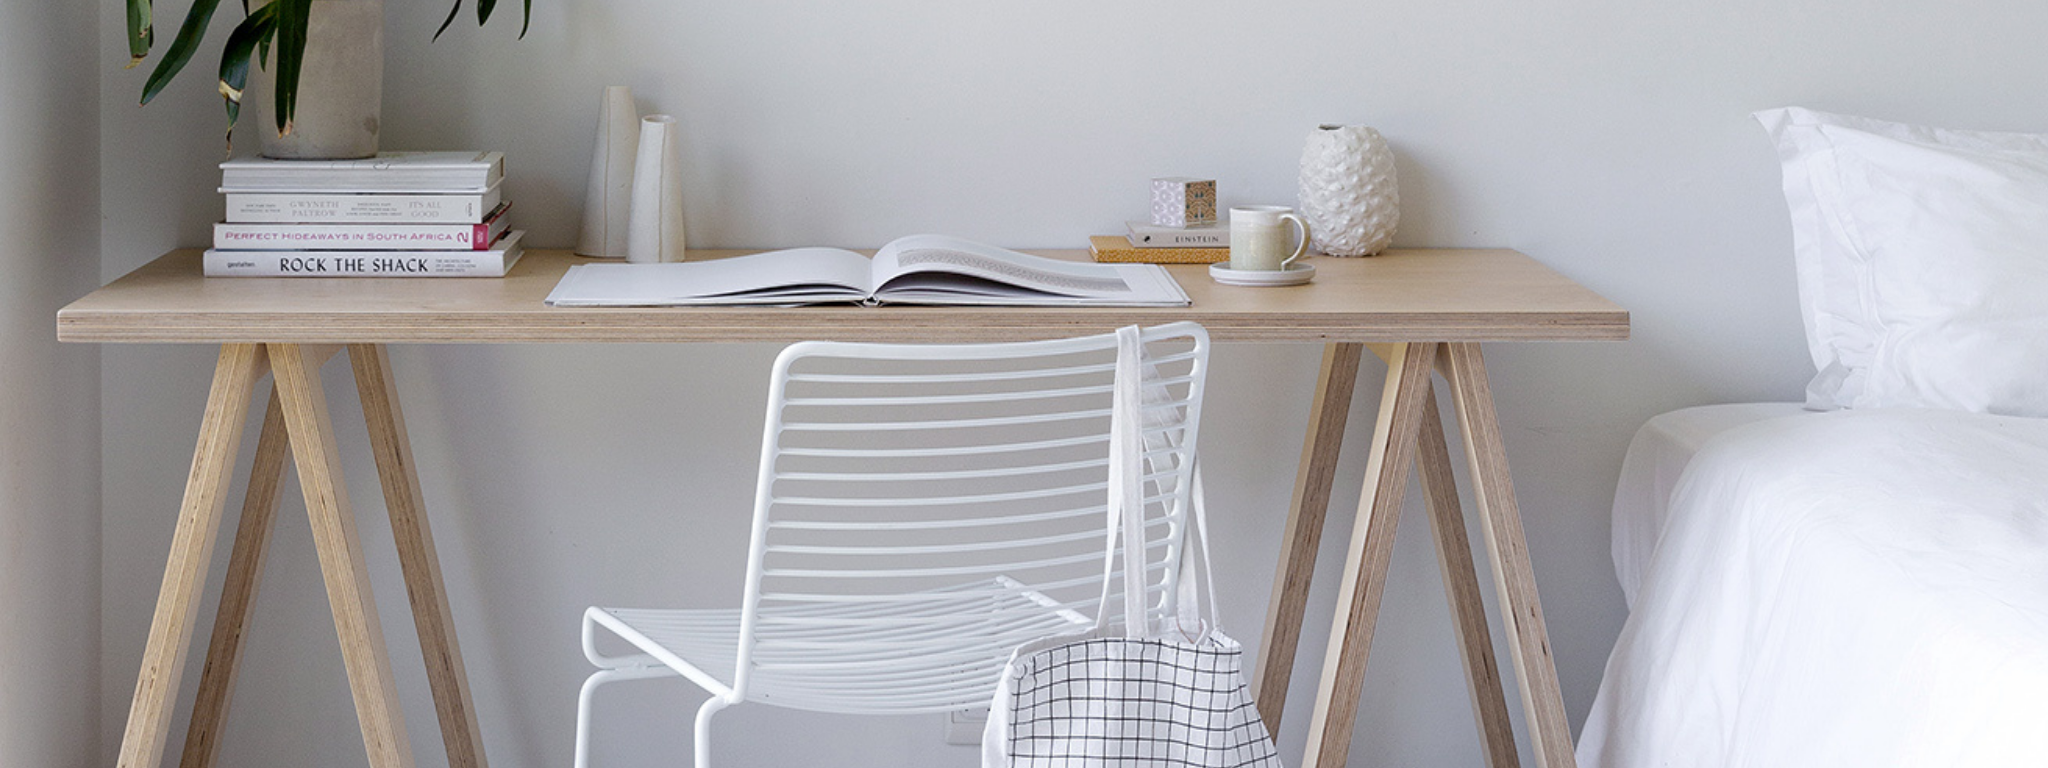 Home Office Inspiration | Shop Now | Remote Working | Desks | Office | Shelves | Cabinets